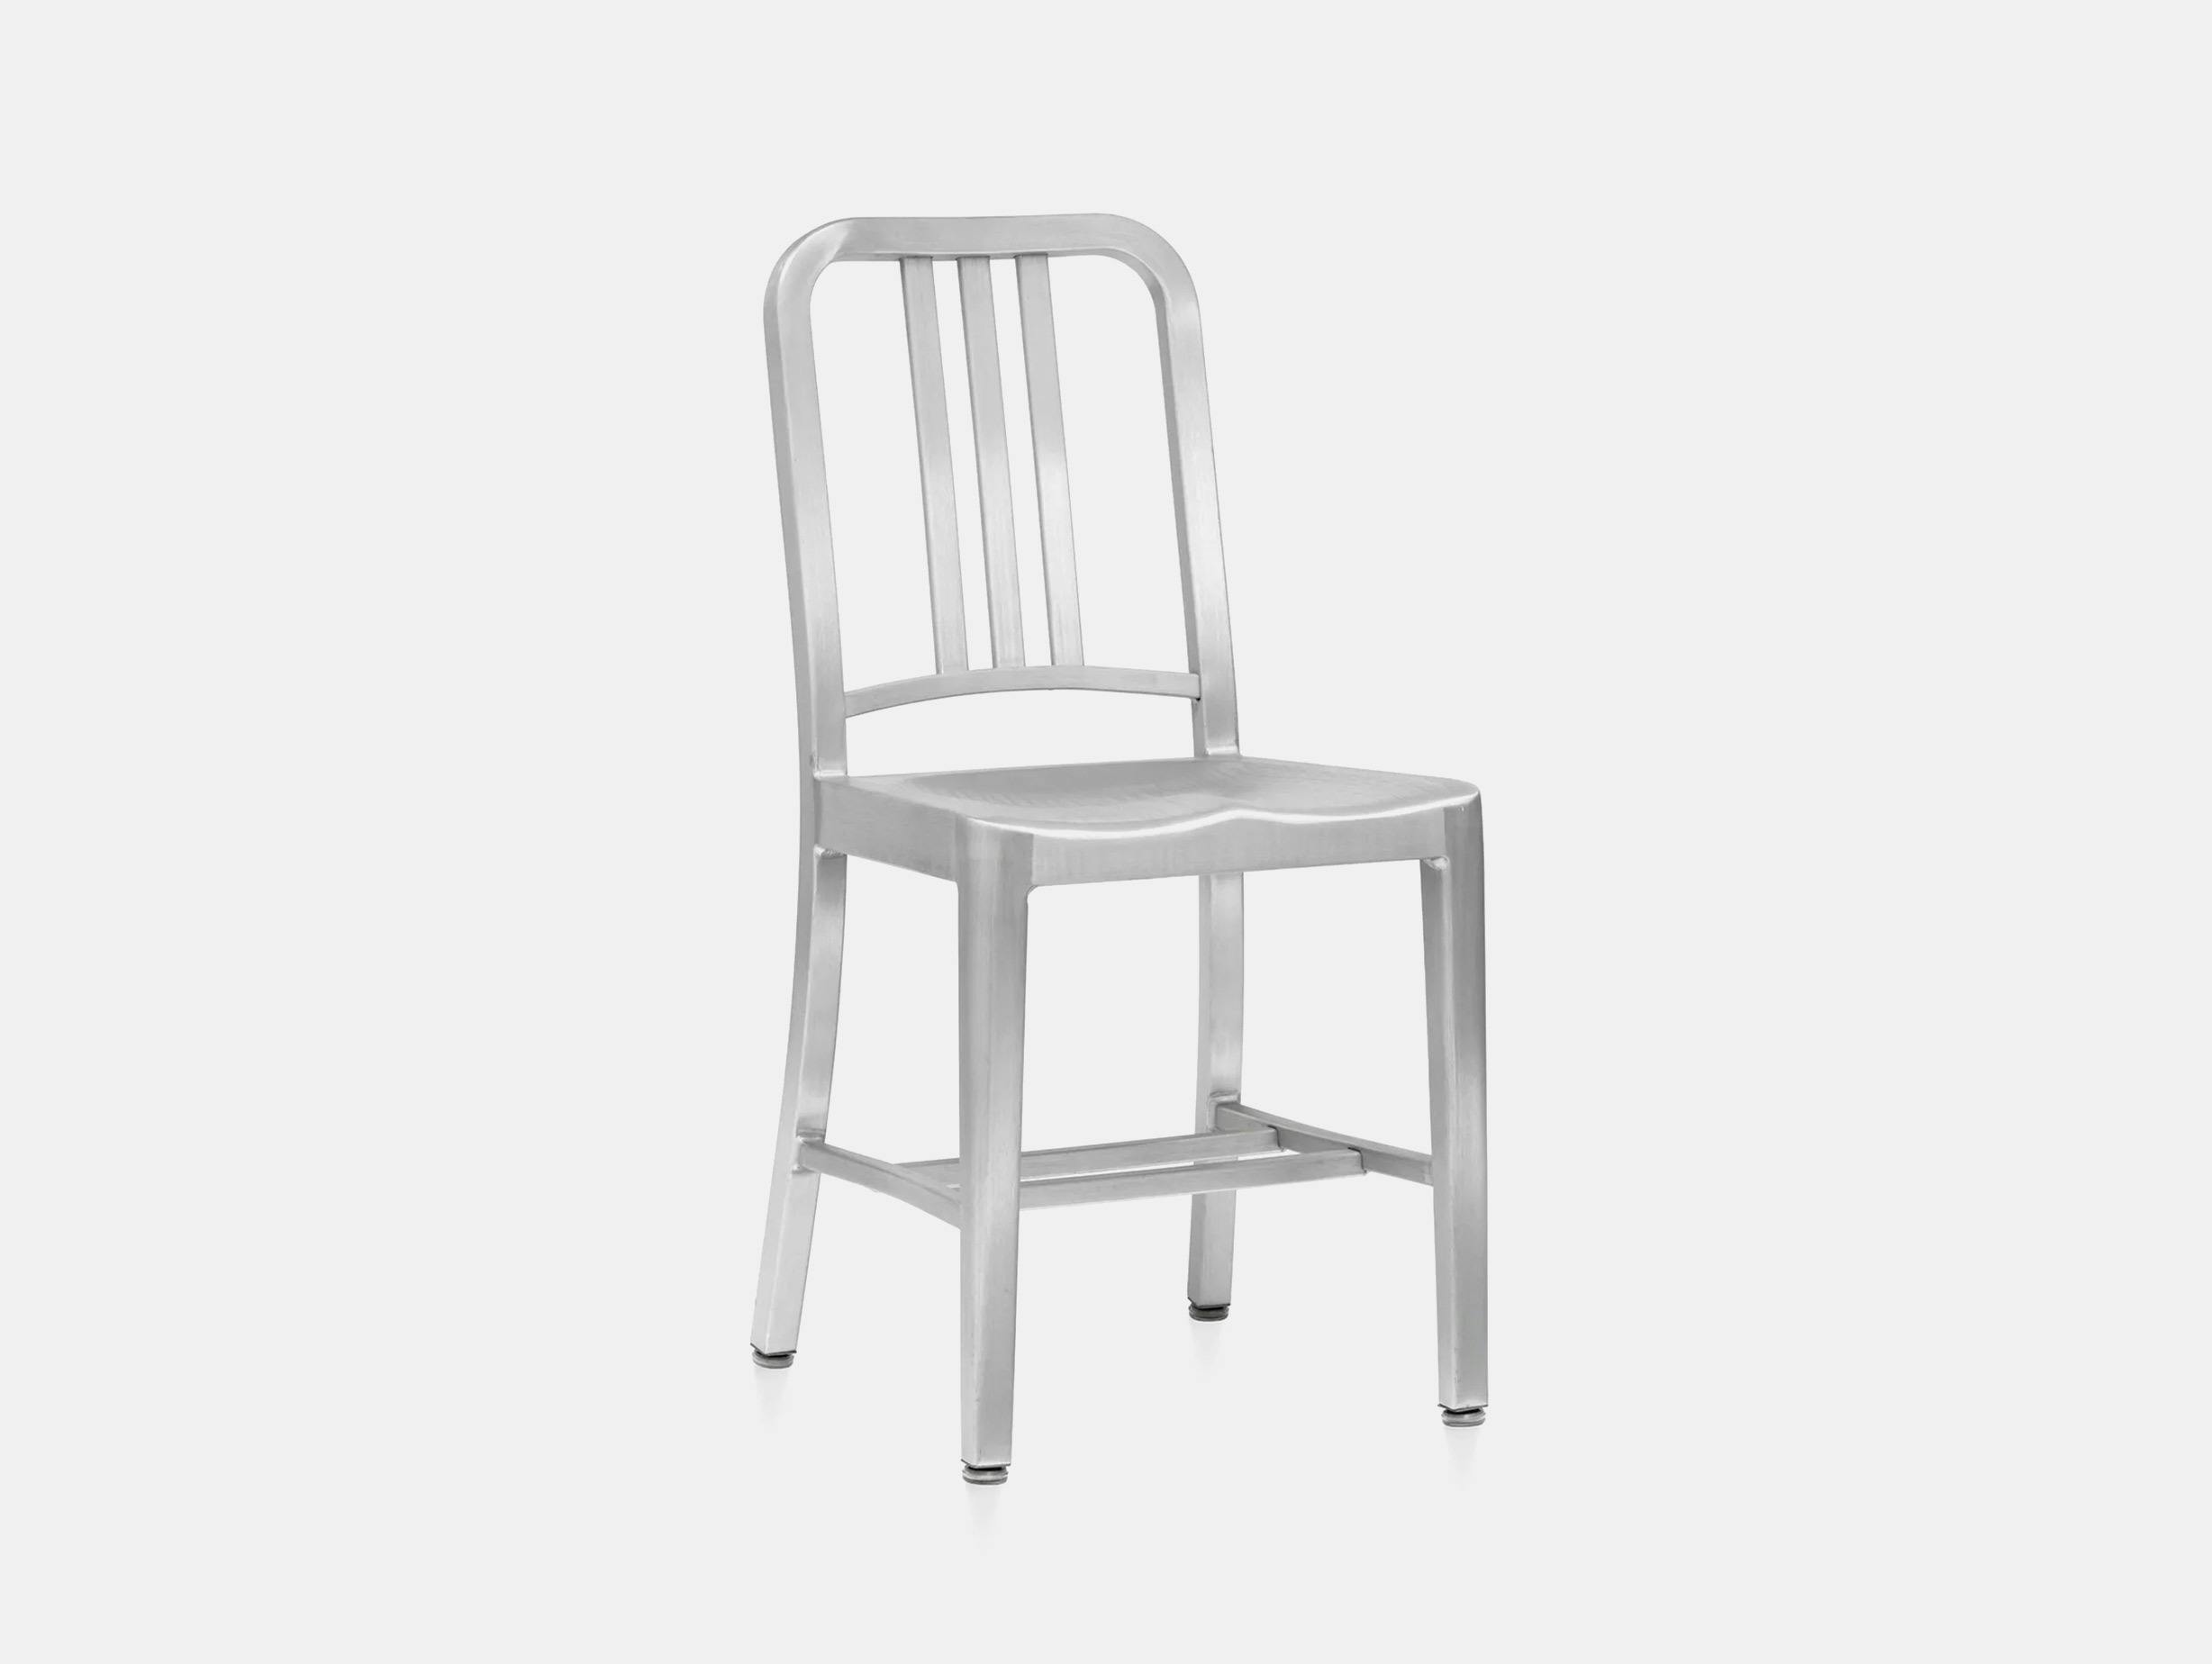 Emeco navy chair 1006 brushed aluminium